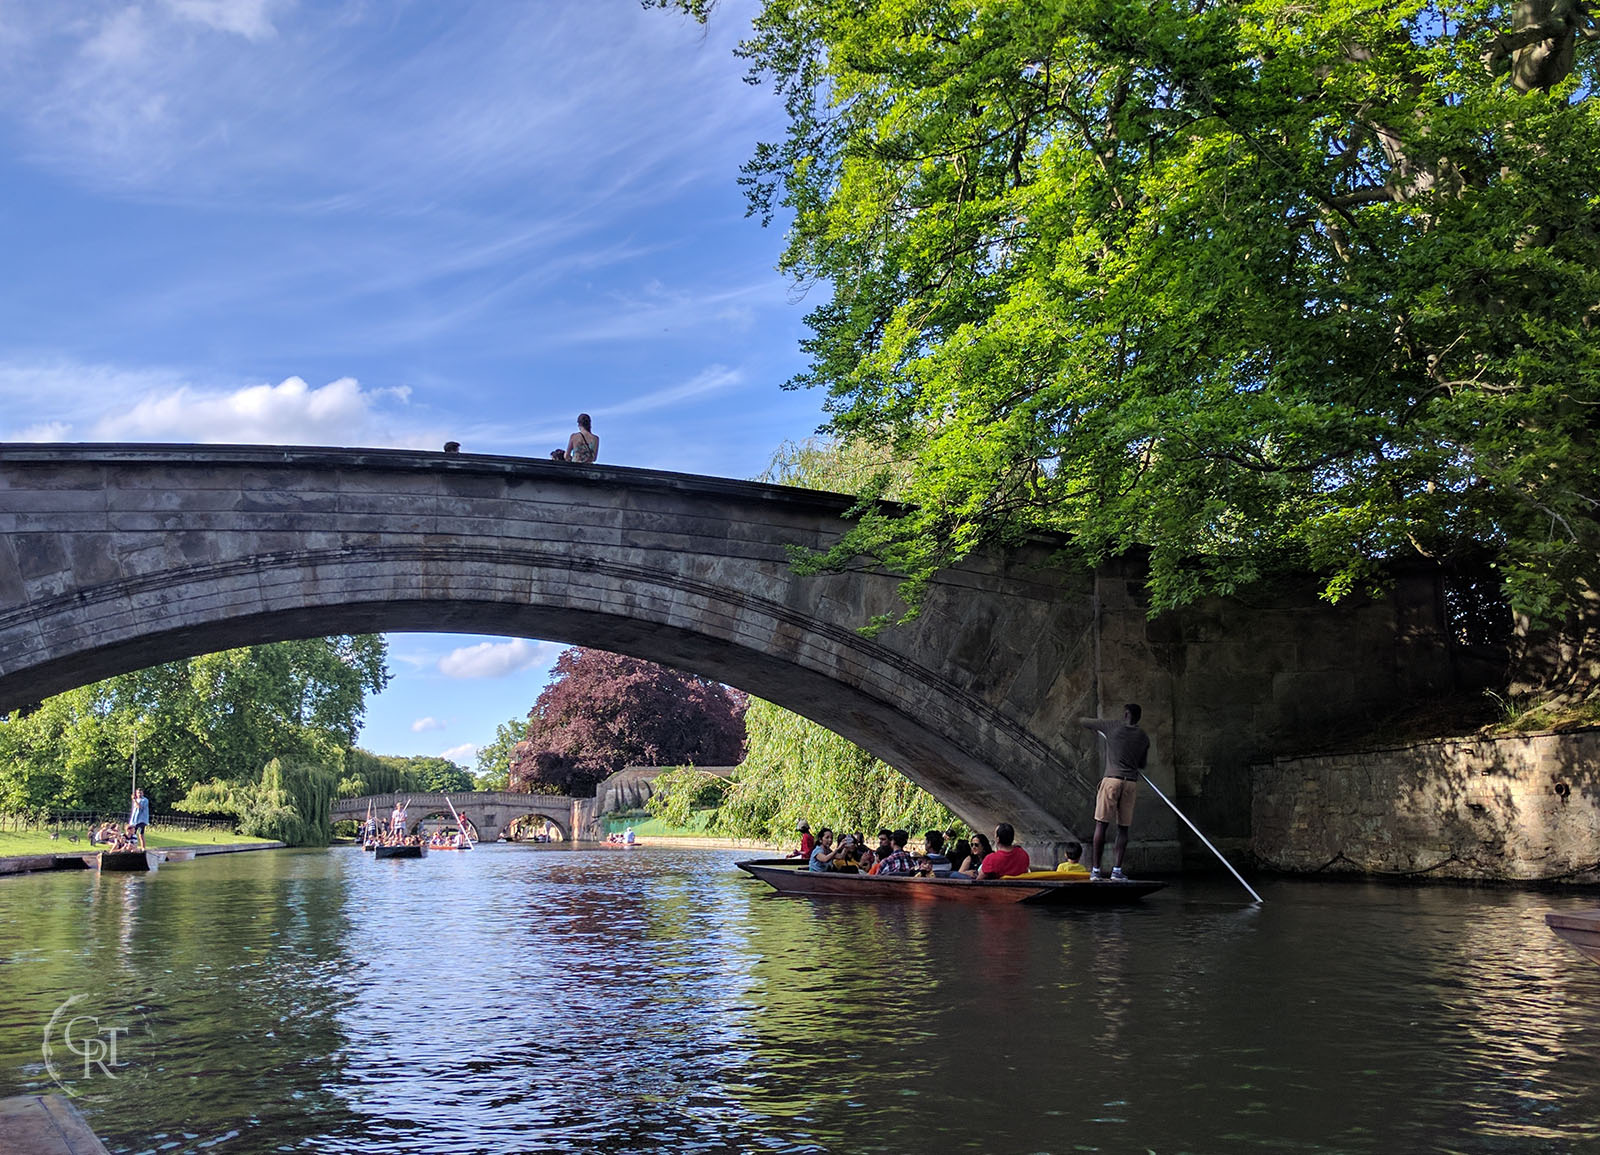 Kings bridge, Cambridge in the summer